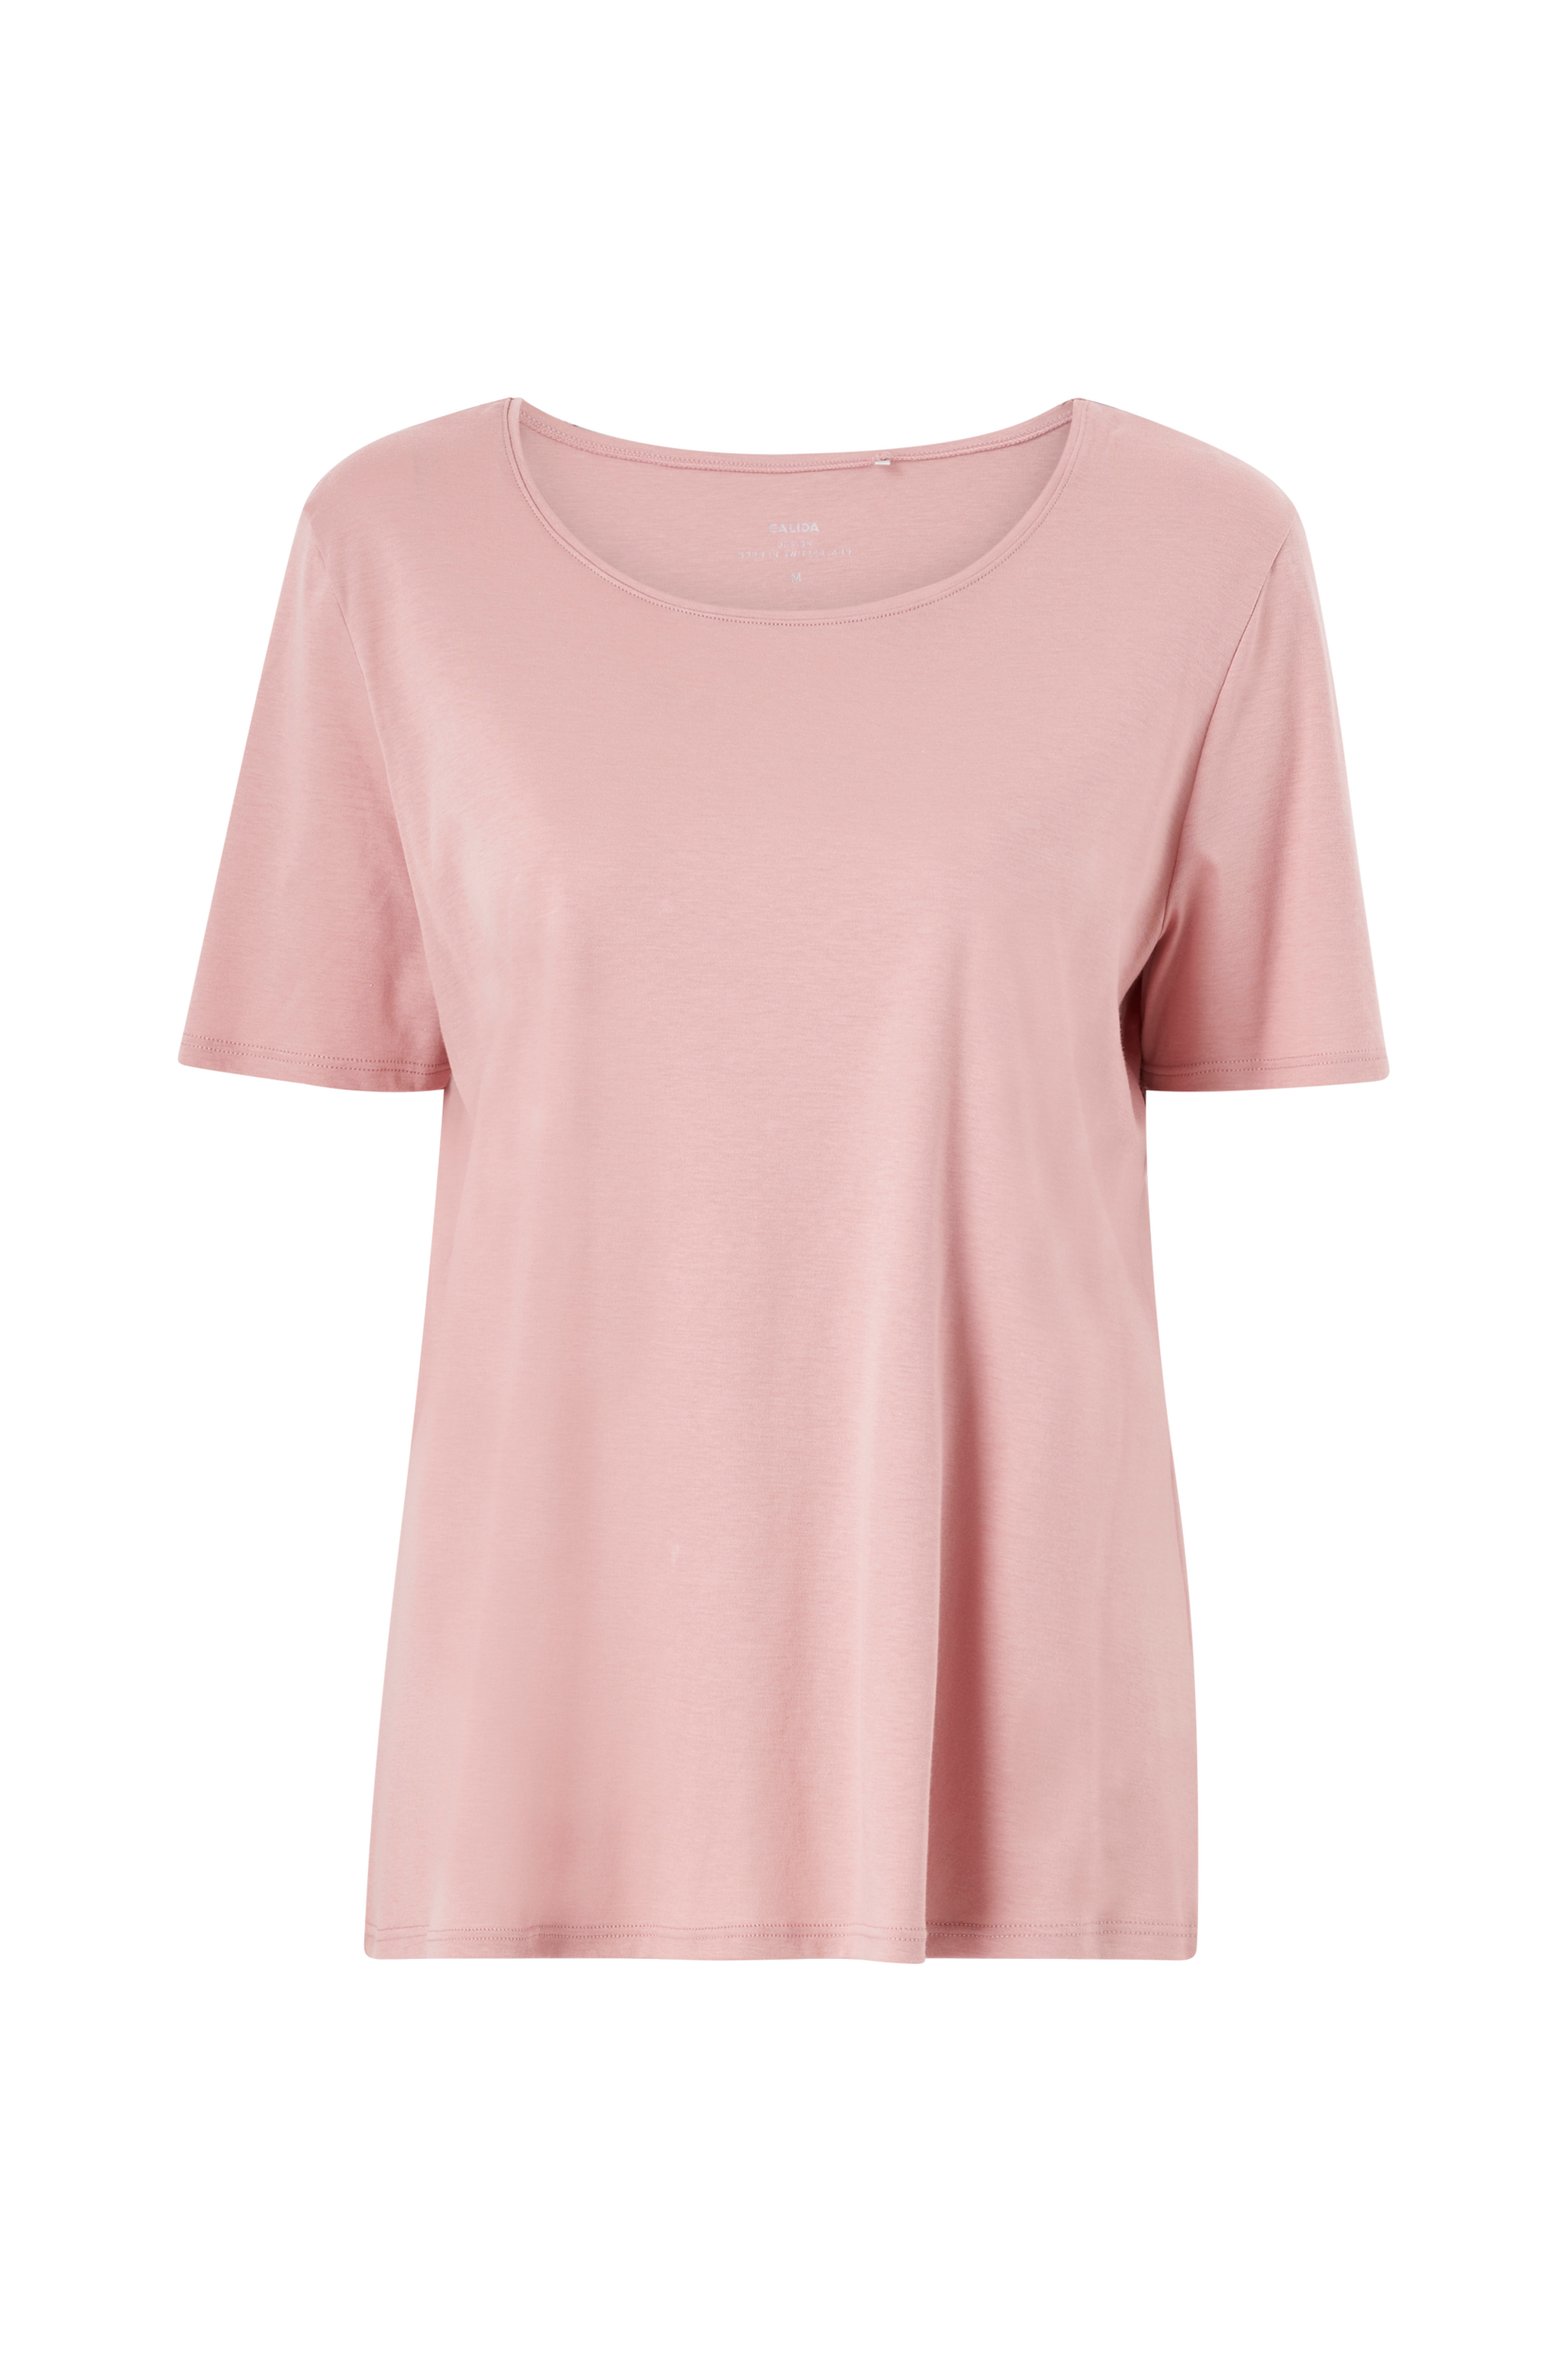 Calida - Top Favourites Dreams T-shirt - Rosa - 36/38